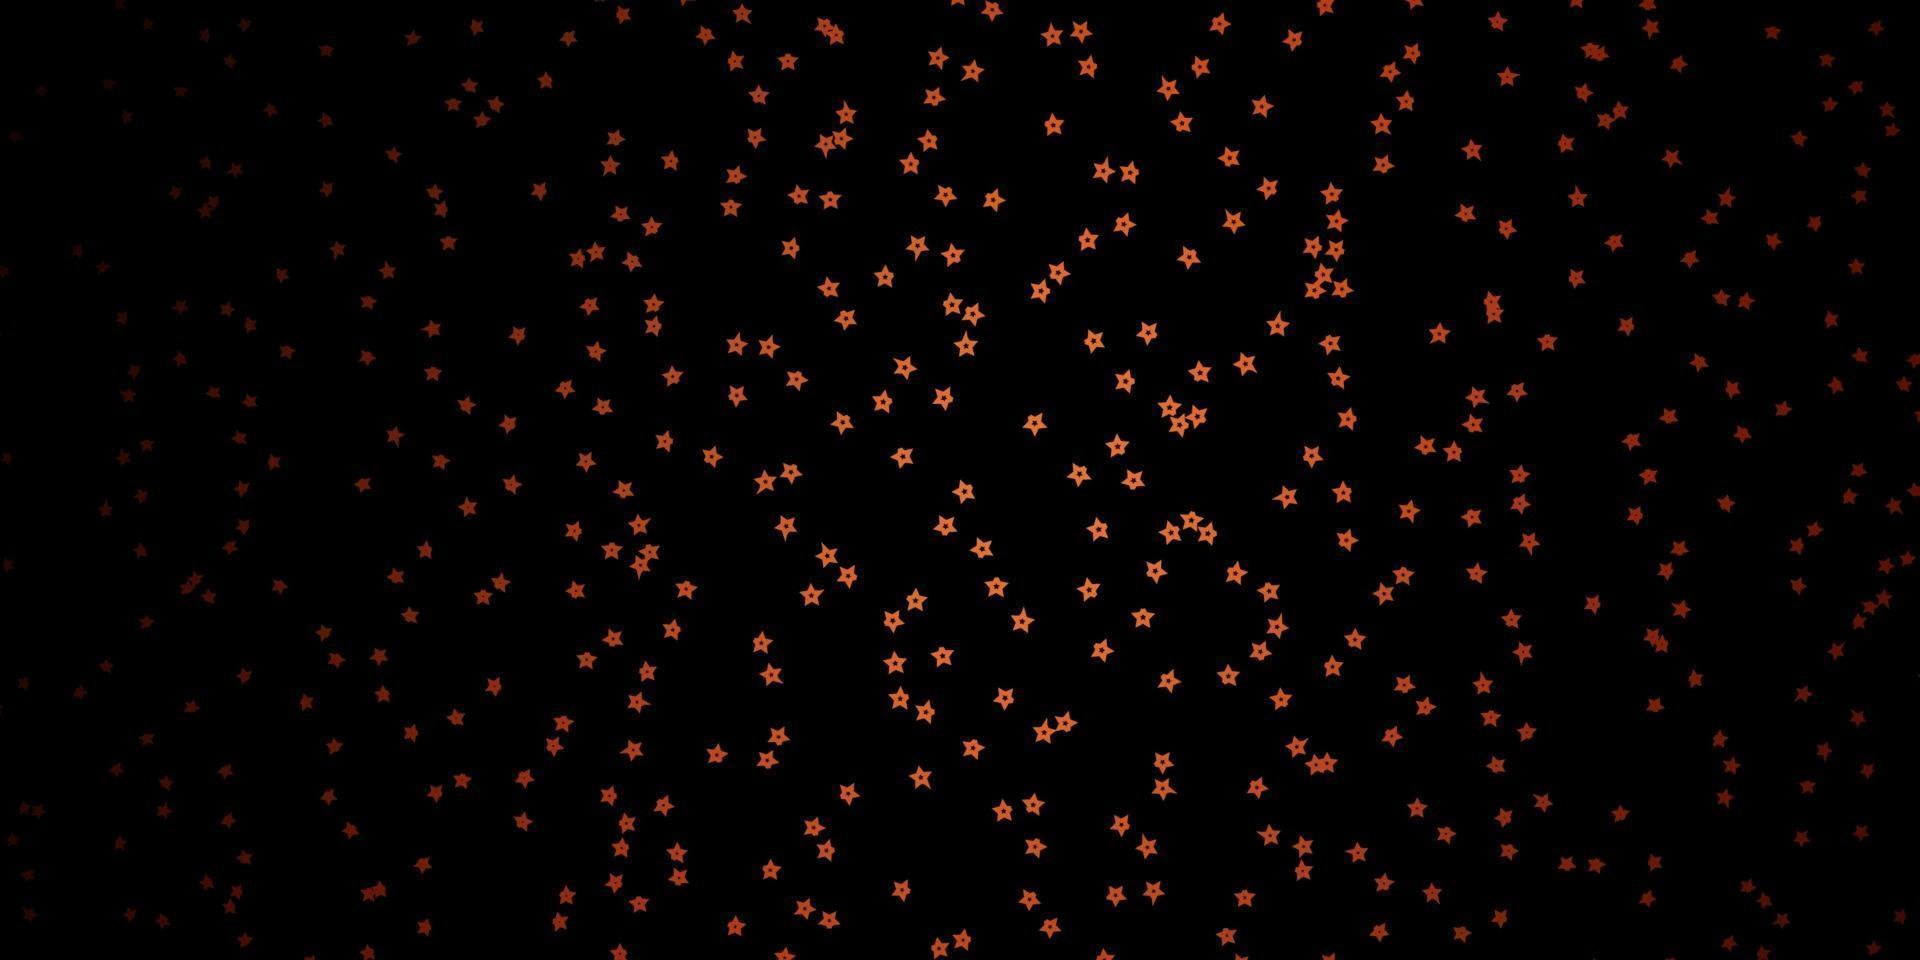 layout de vetor laranja escuro com estrelas brilhantes.